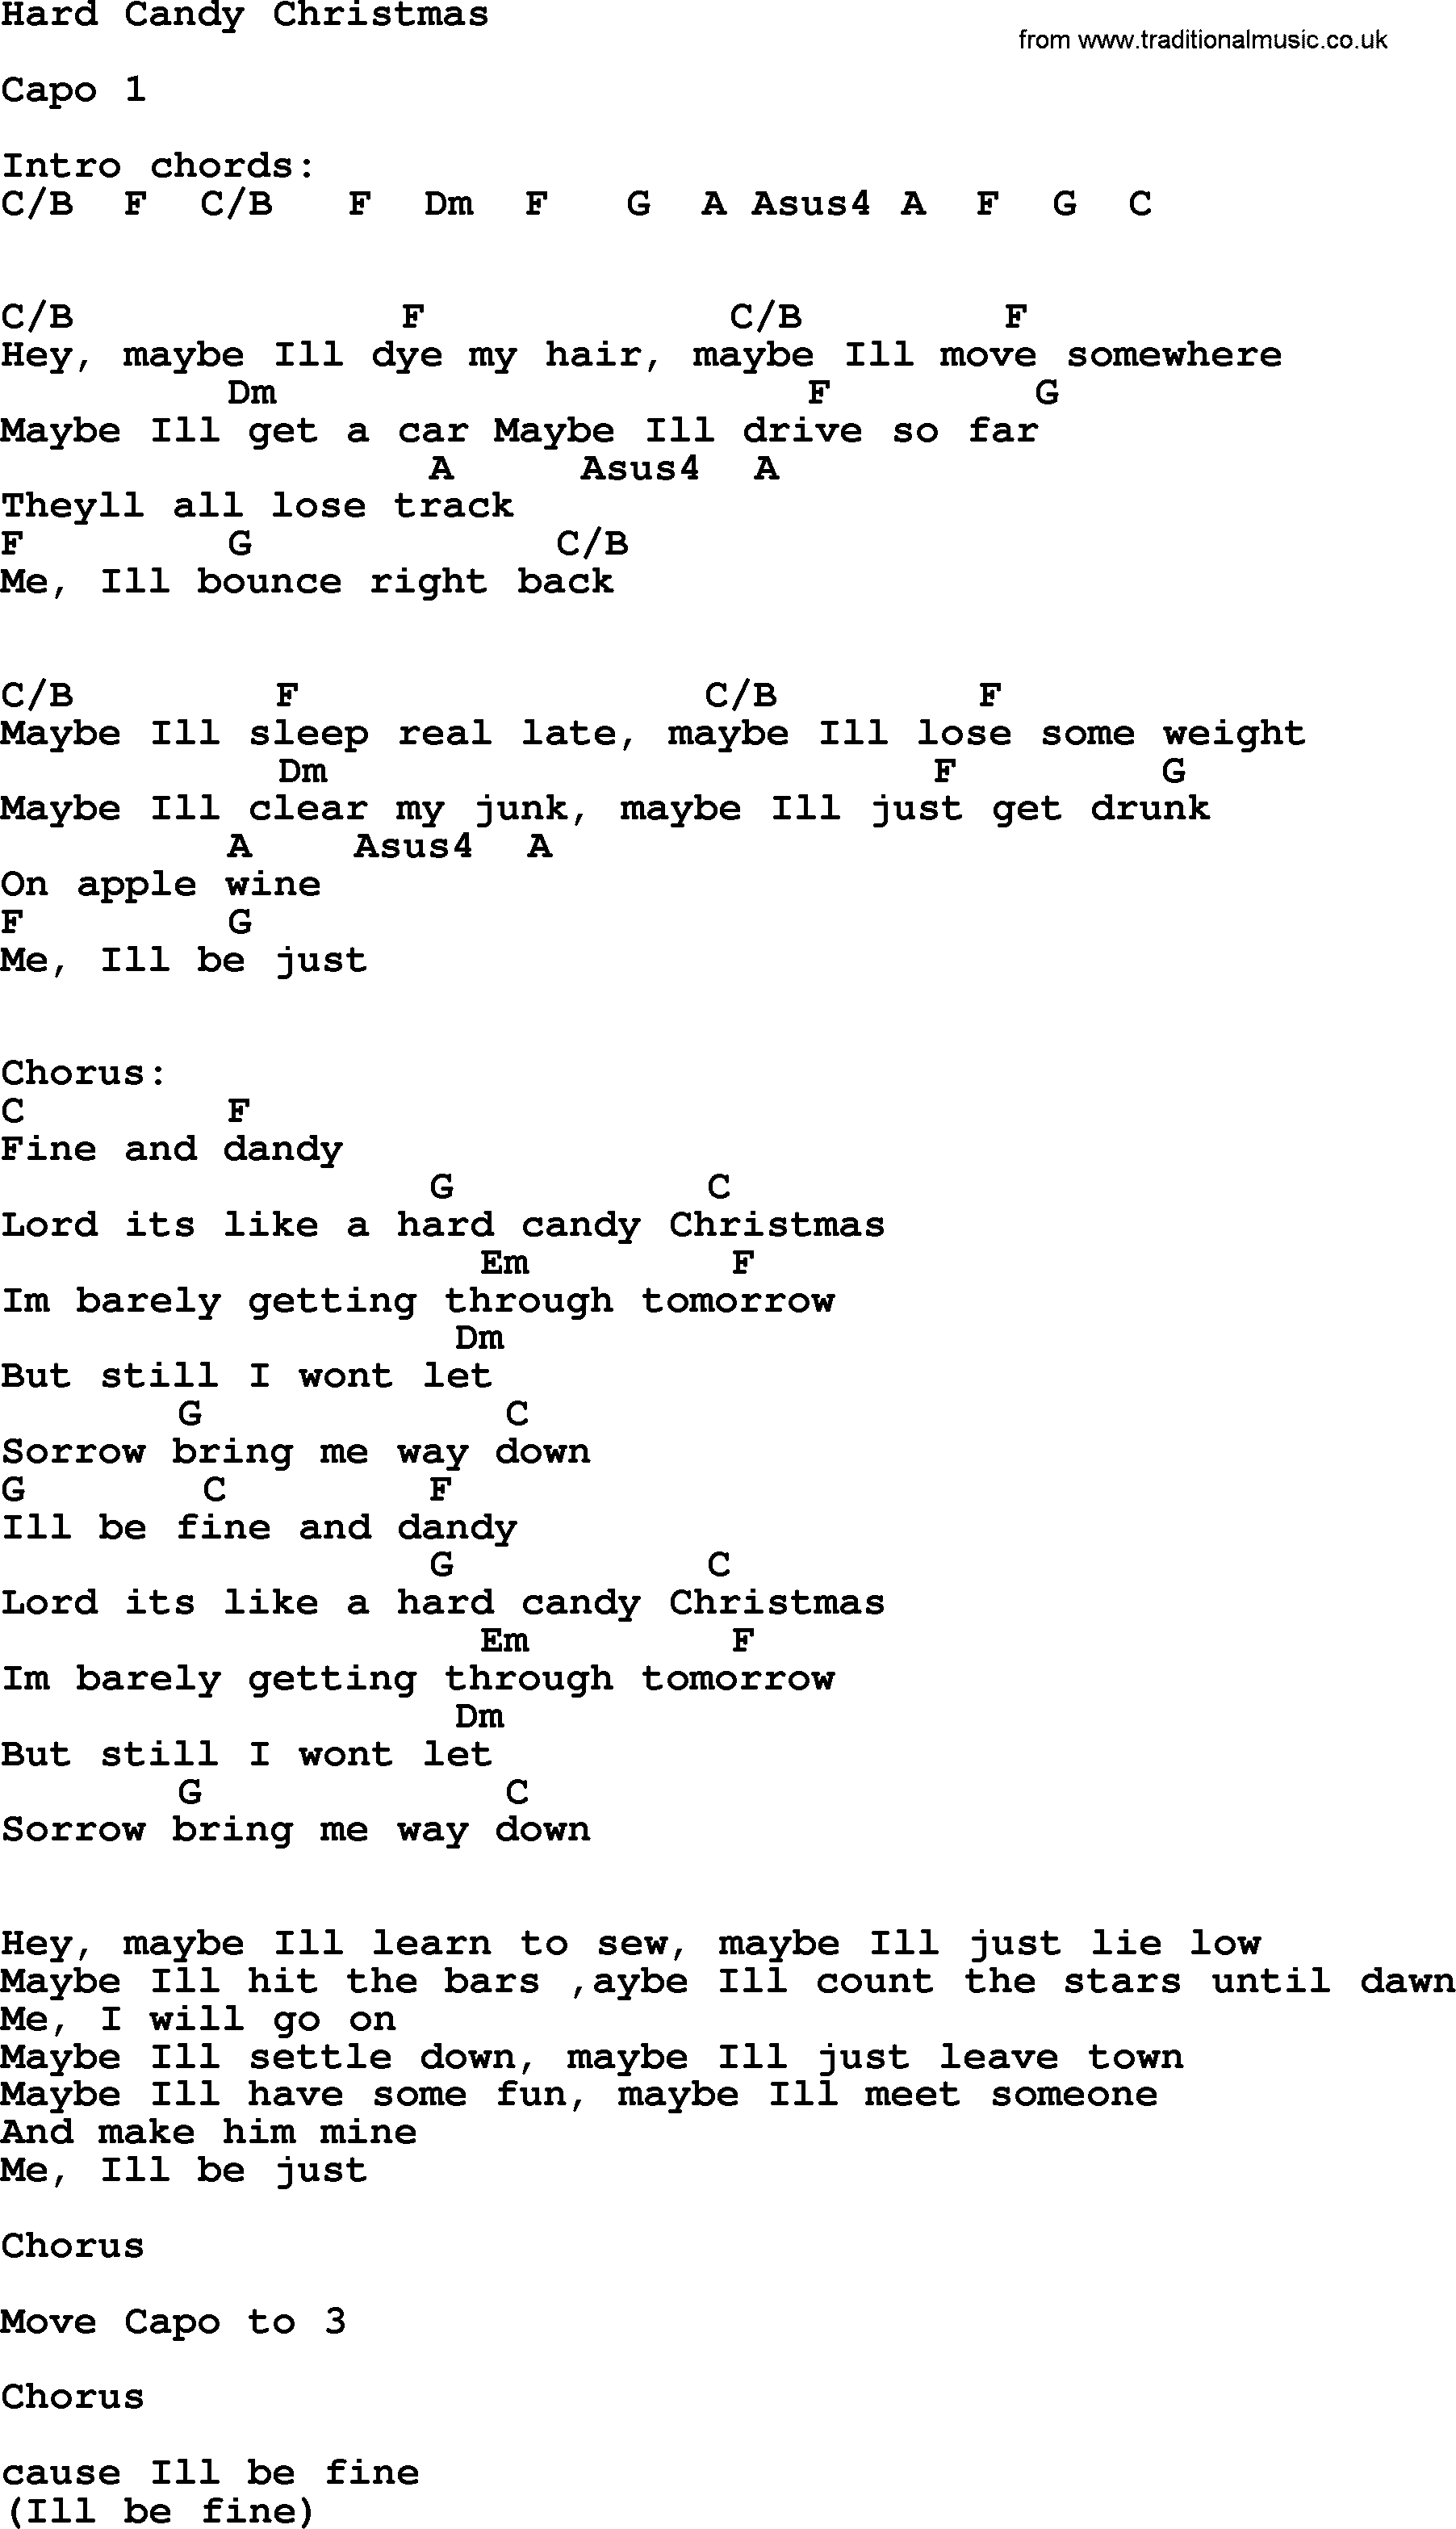 Dolly Parton song Hard Candy Christmas, lyrics and chords